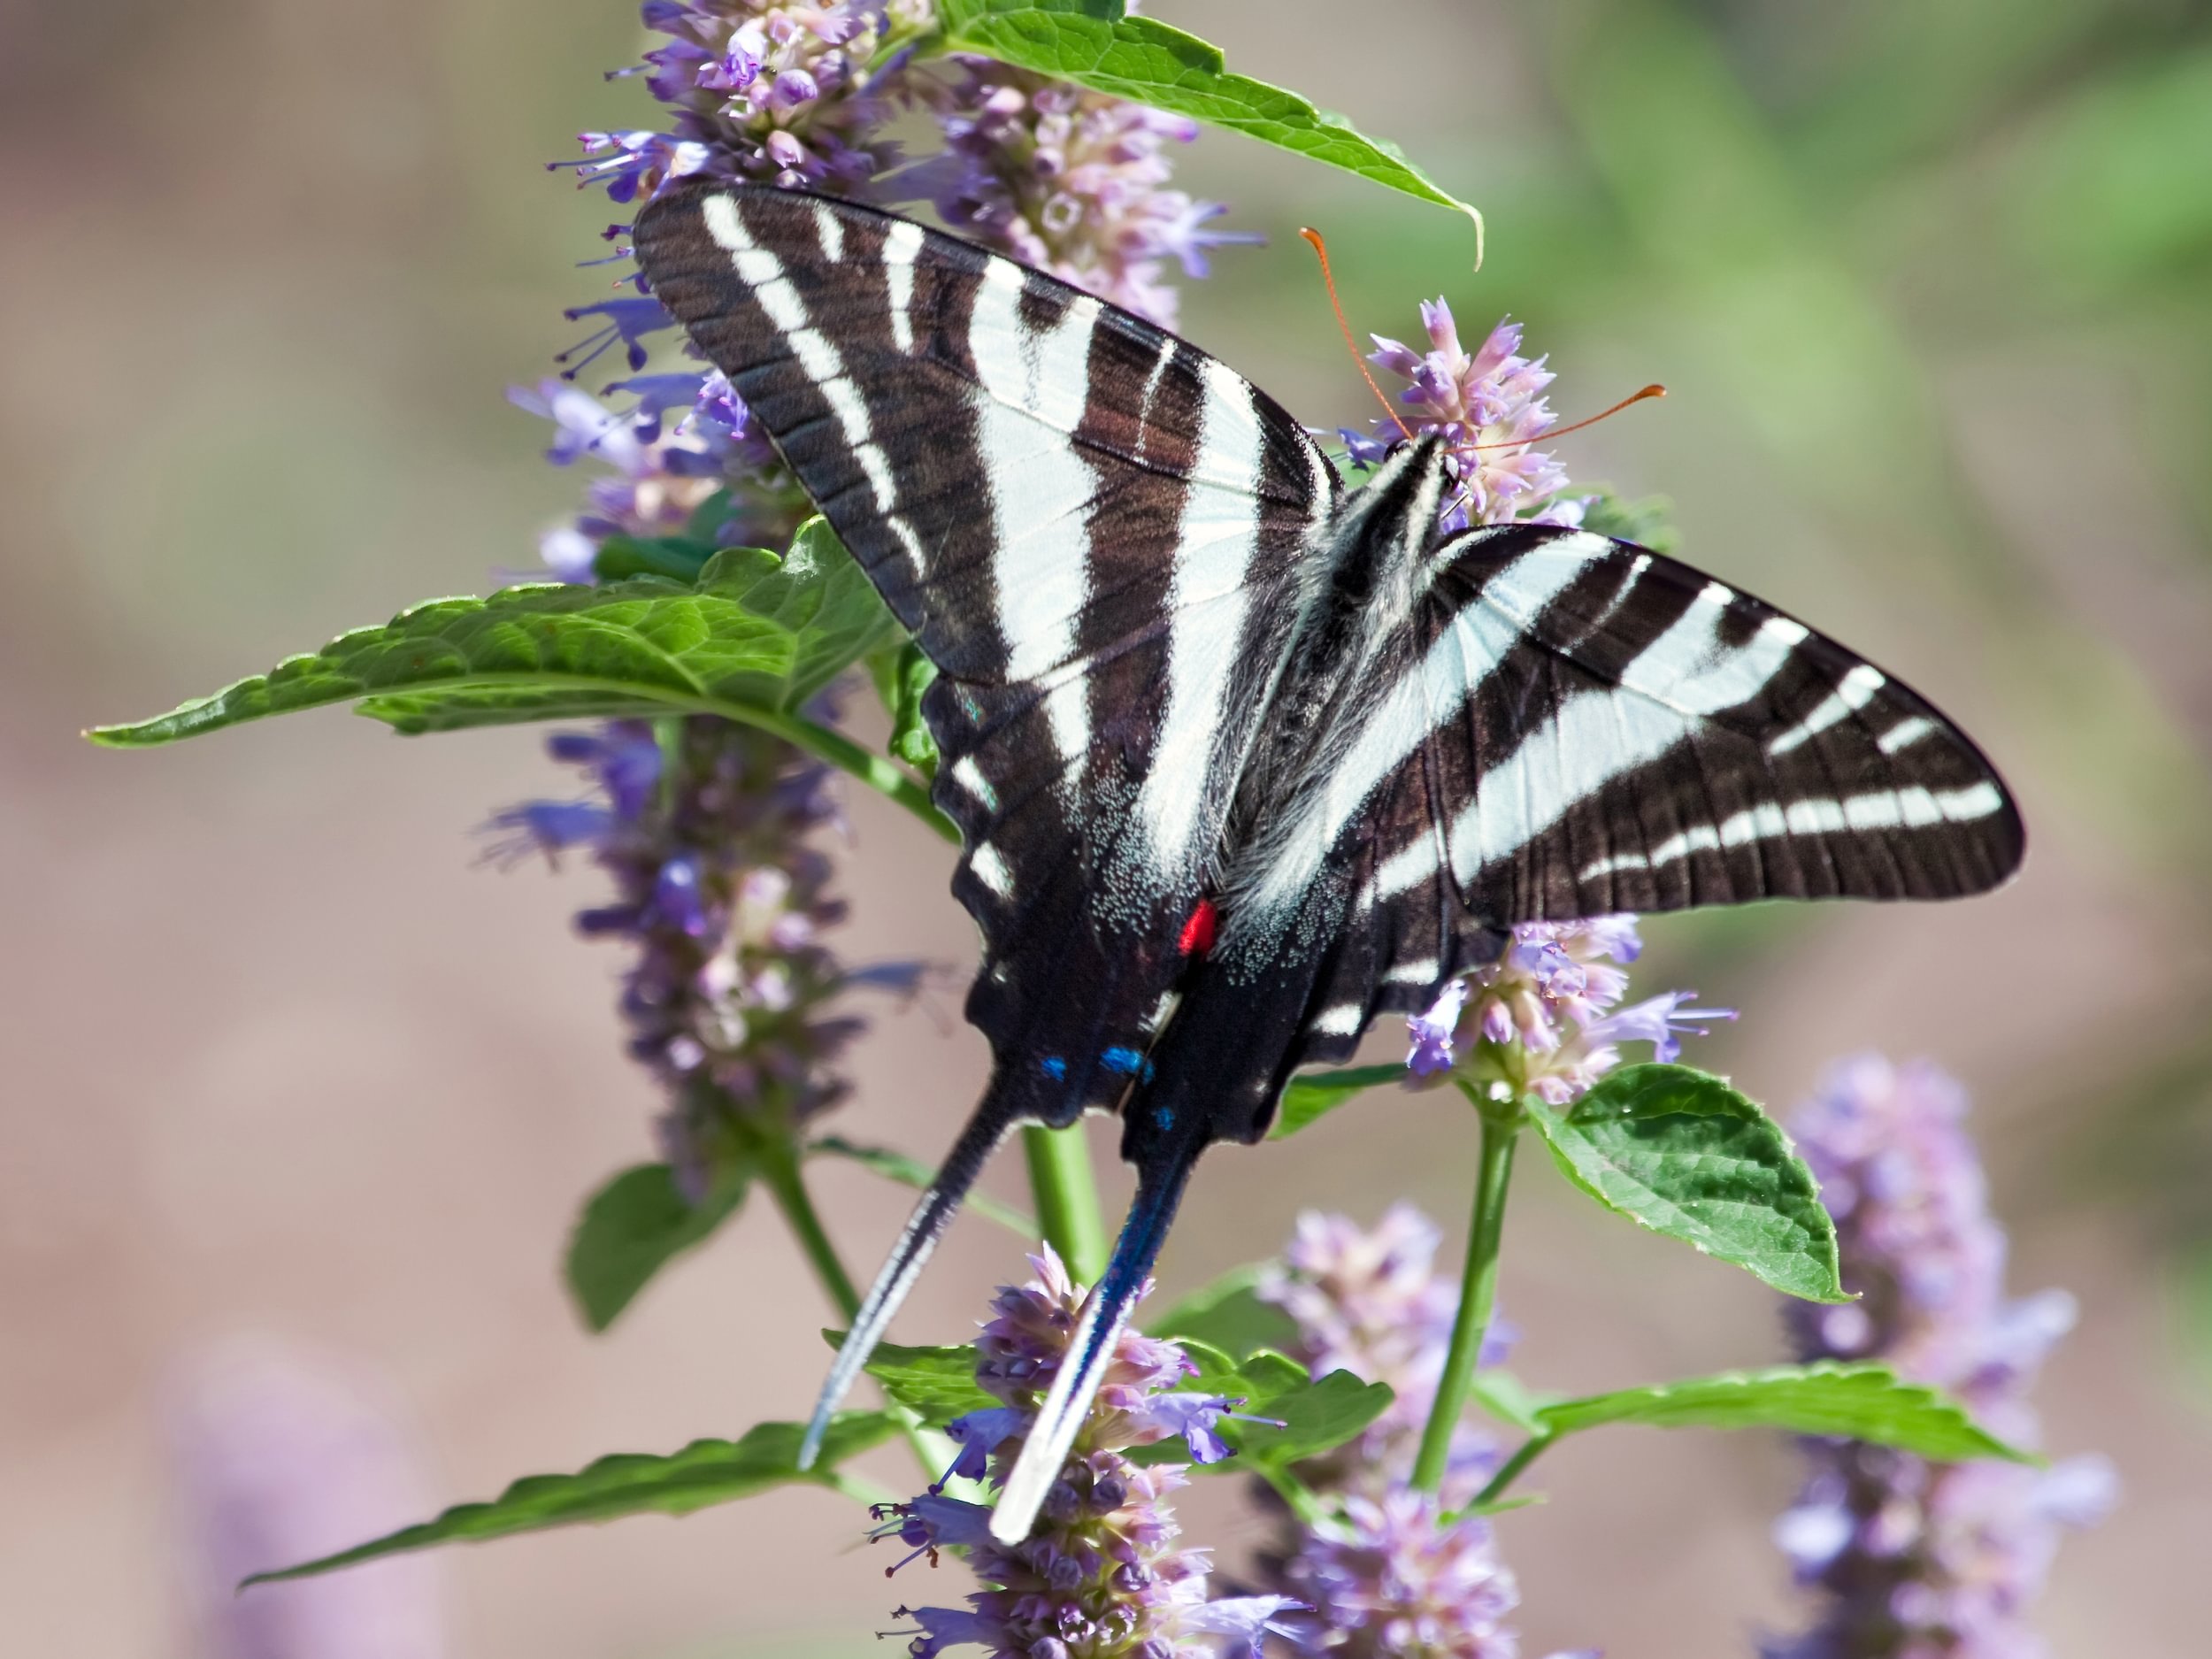 Zebra swallowtail butterfly on a plant